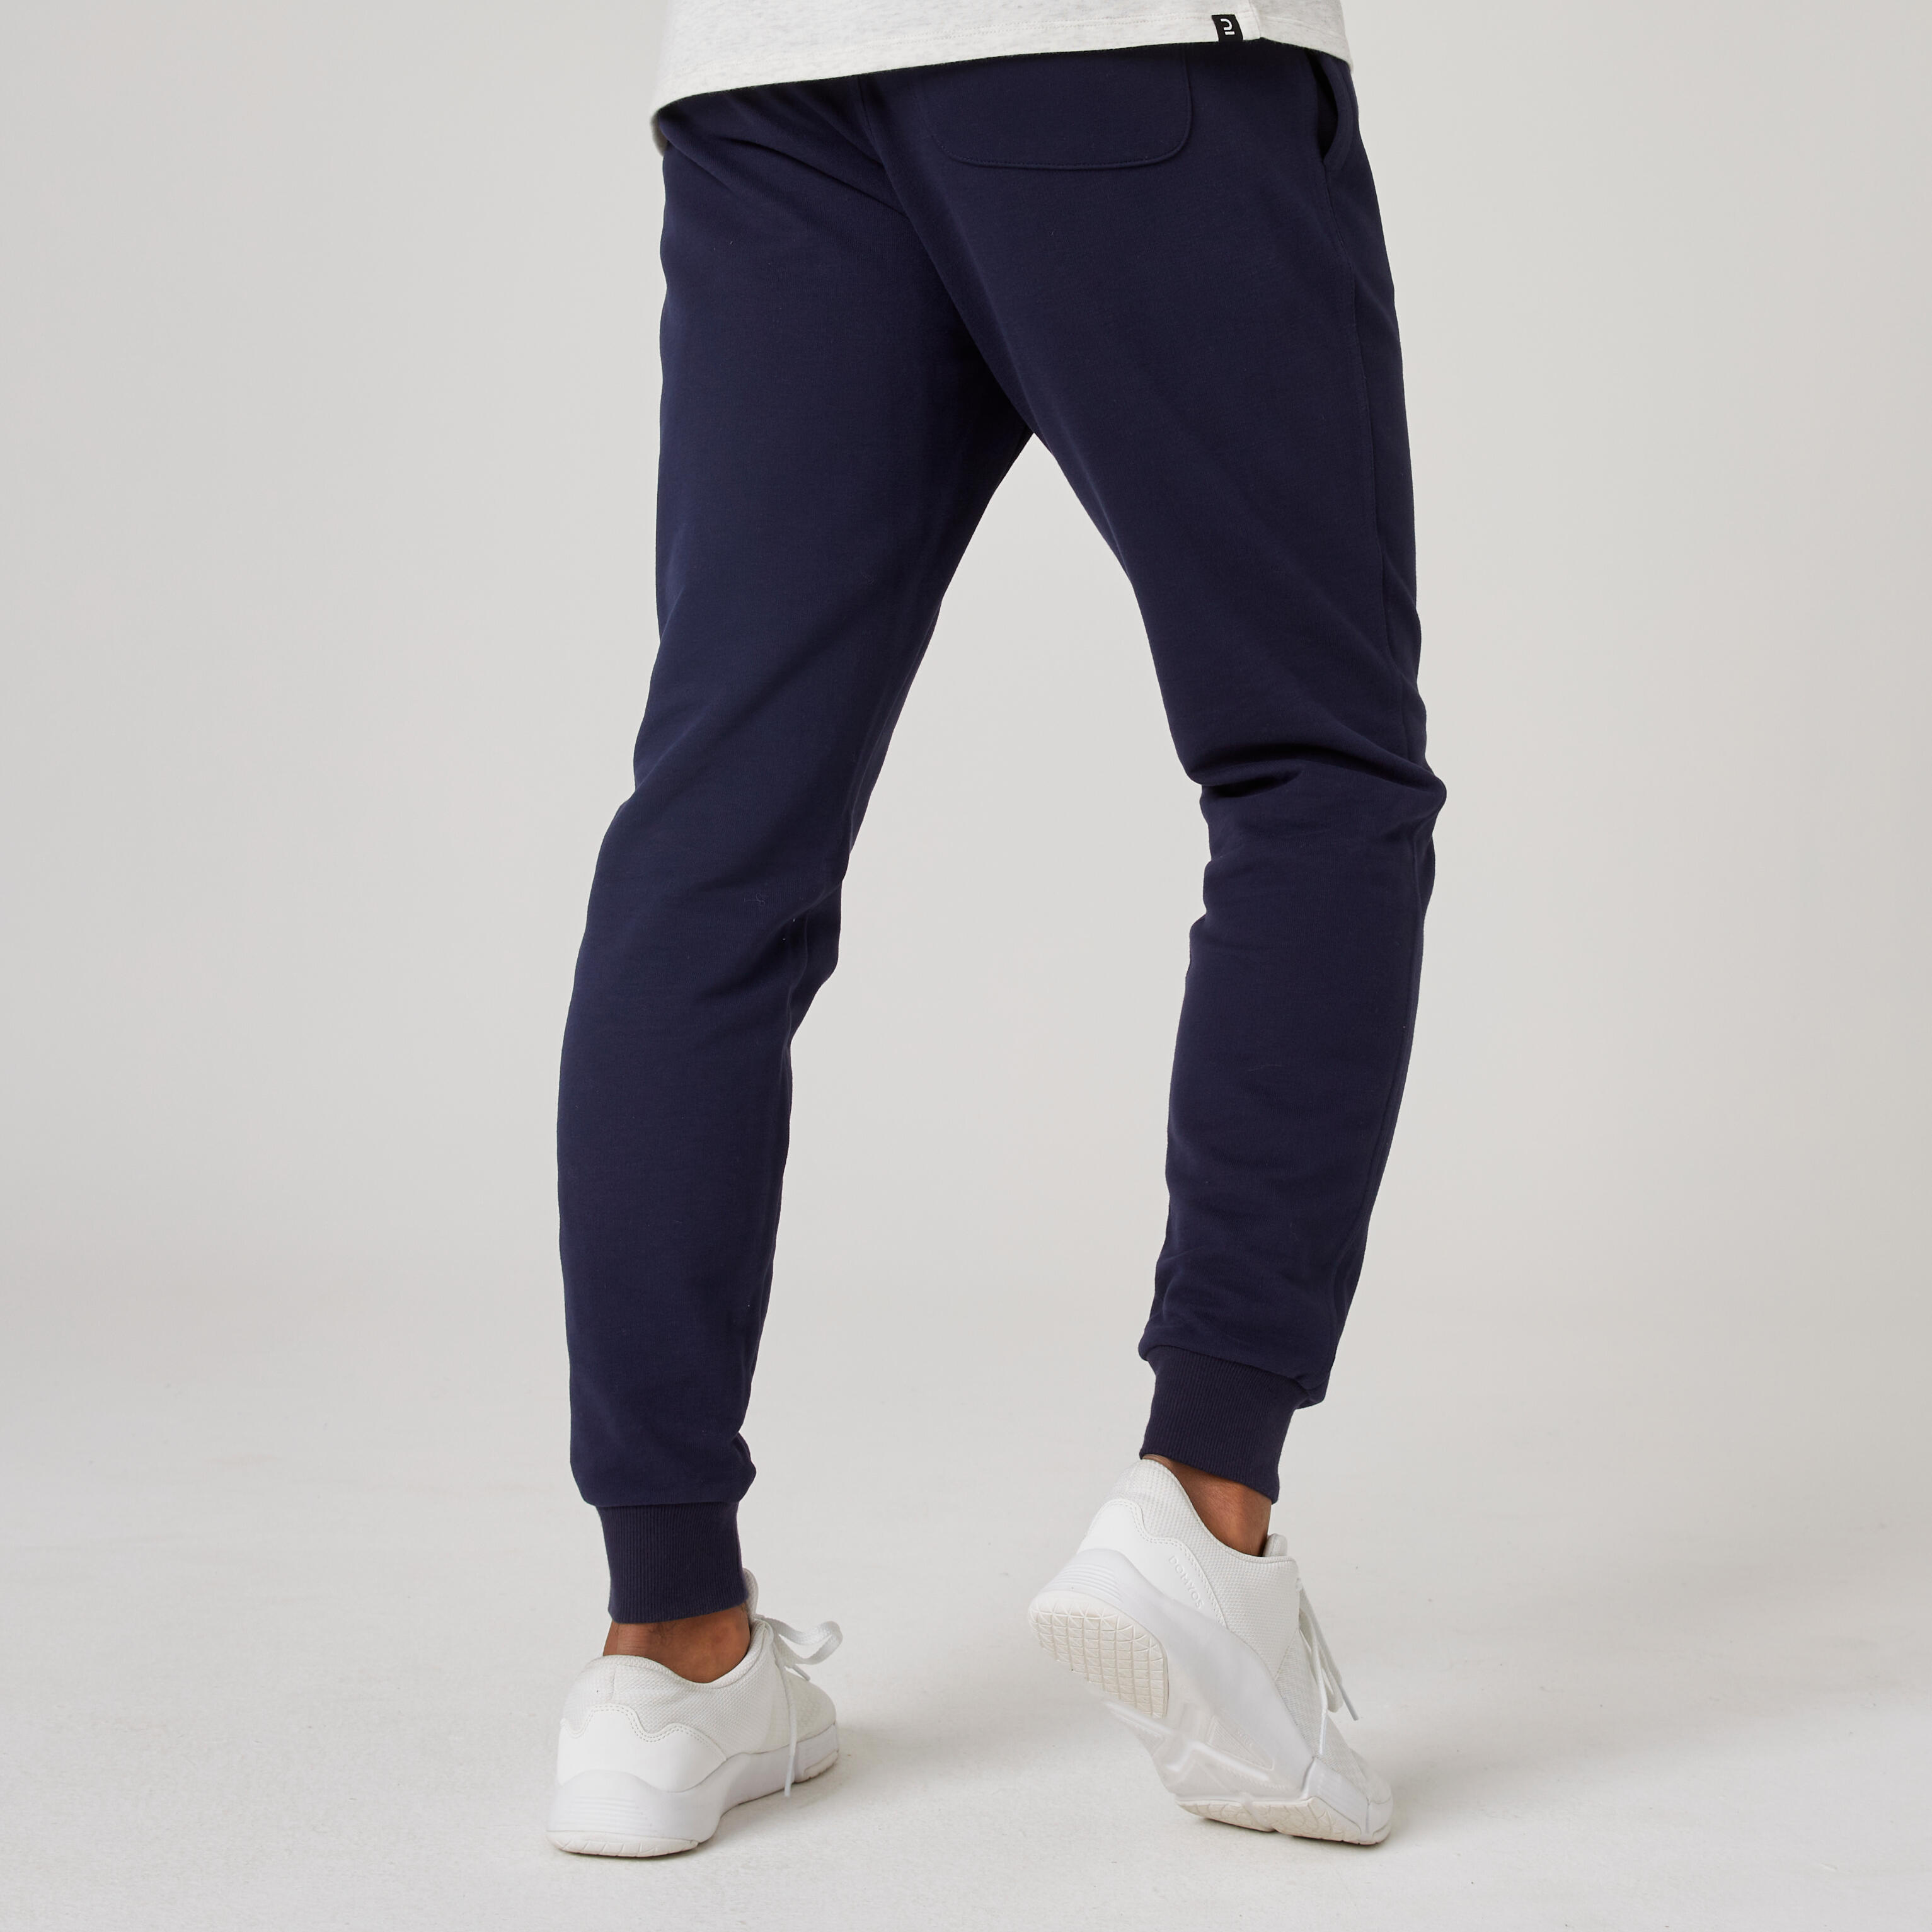 Buy SCR SPORTSWEAR Men's Slim Fit Fitted Pants Workout Activewear